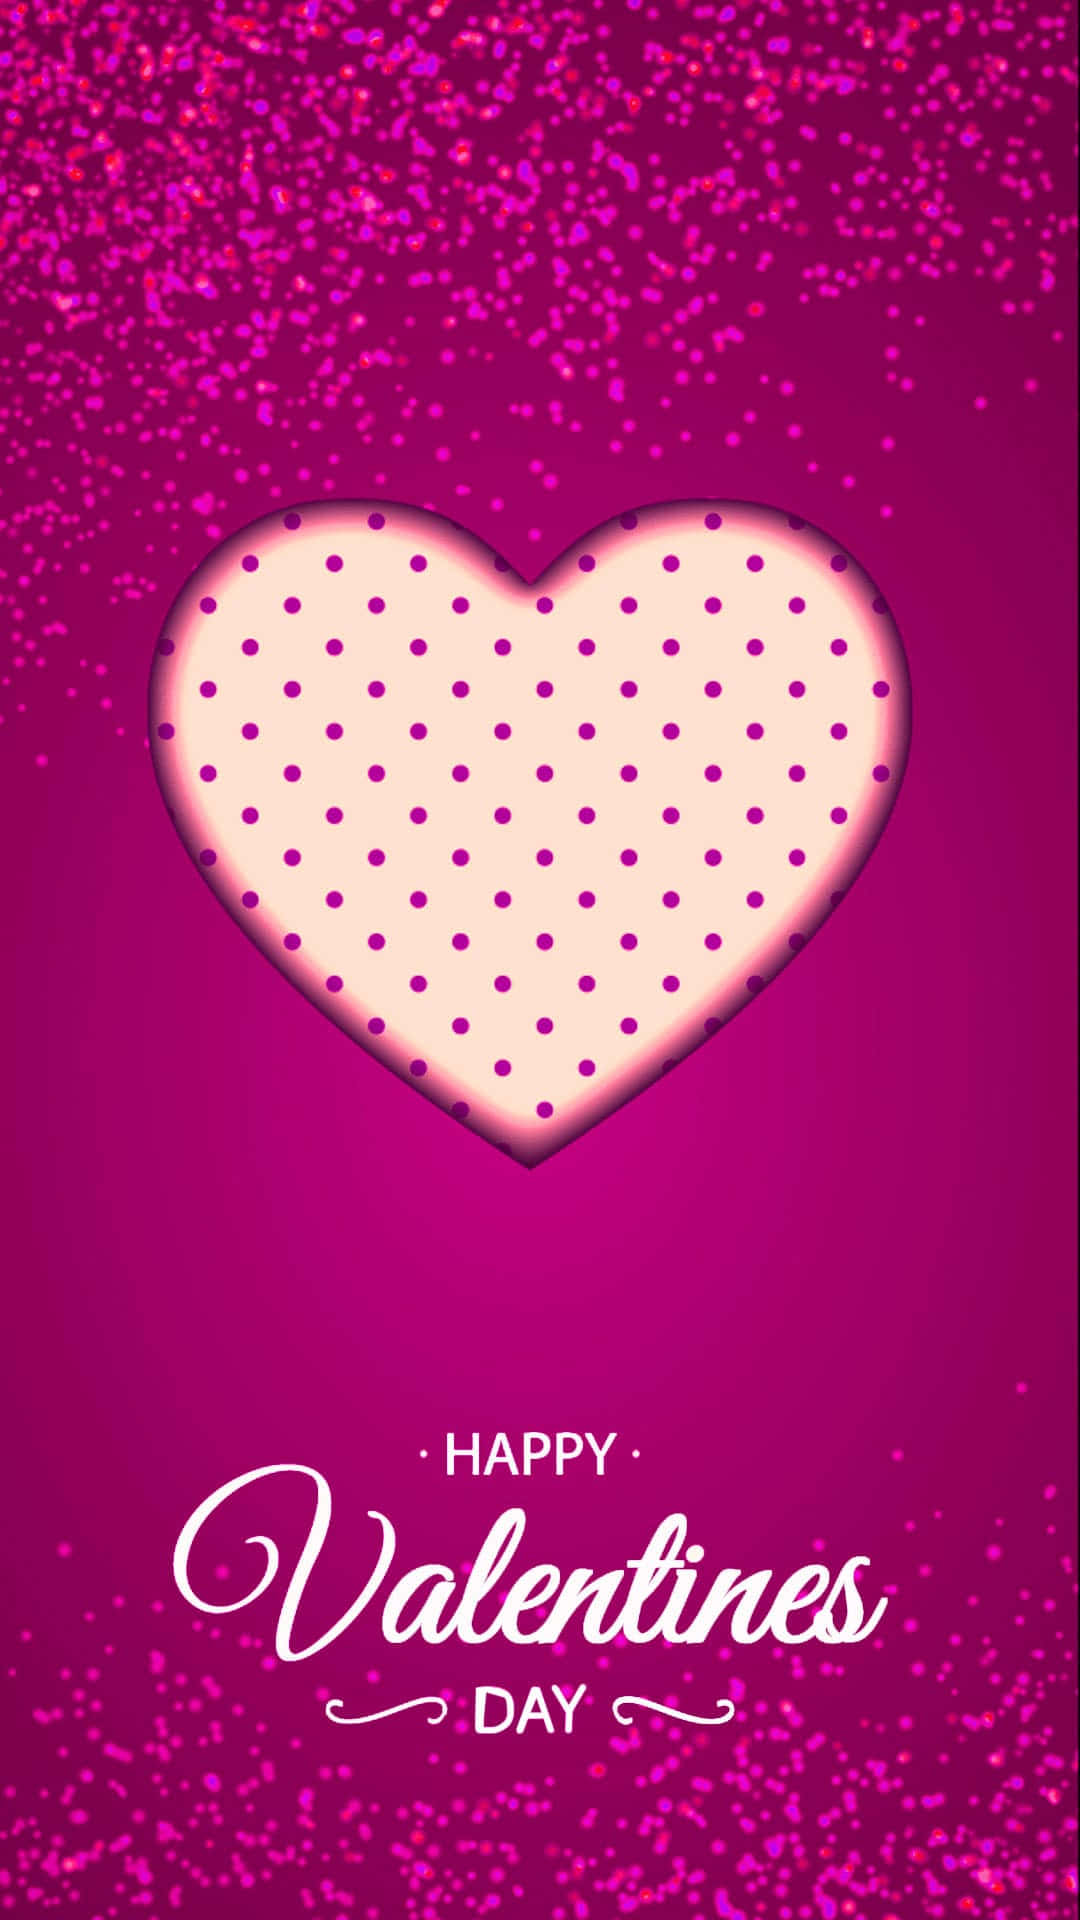 Free Valentines Day Phone Wallpaper Downloads, Valentines Day Phone Wallpaper for FREE